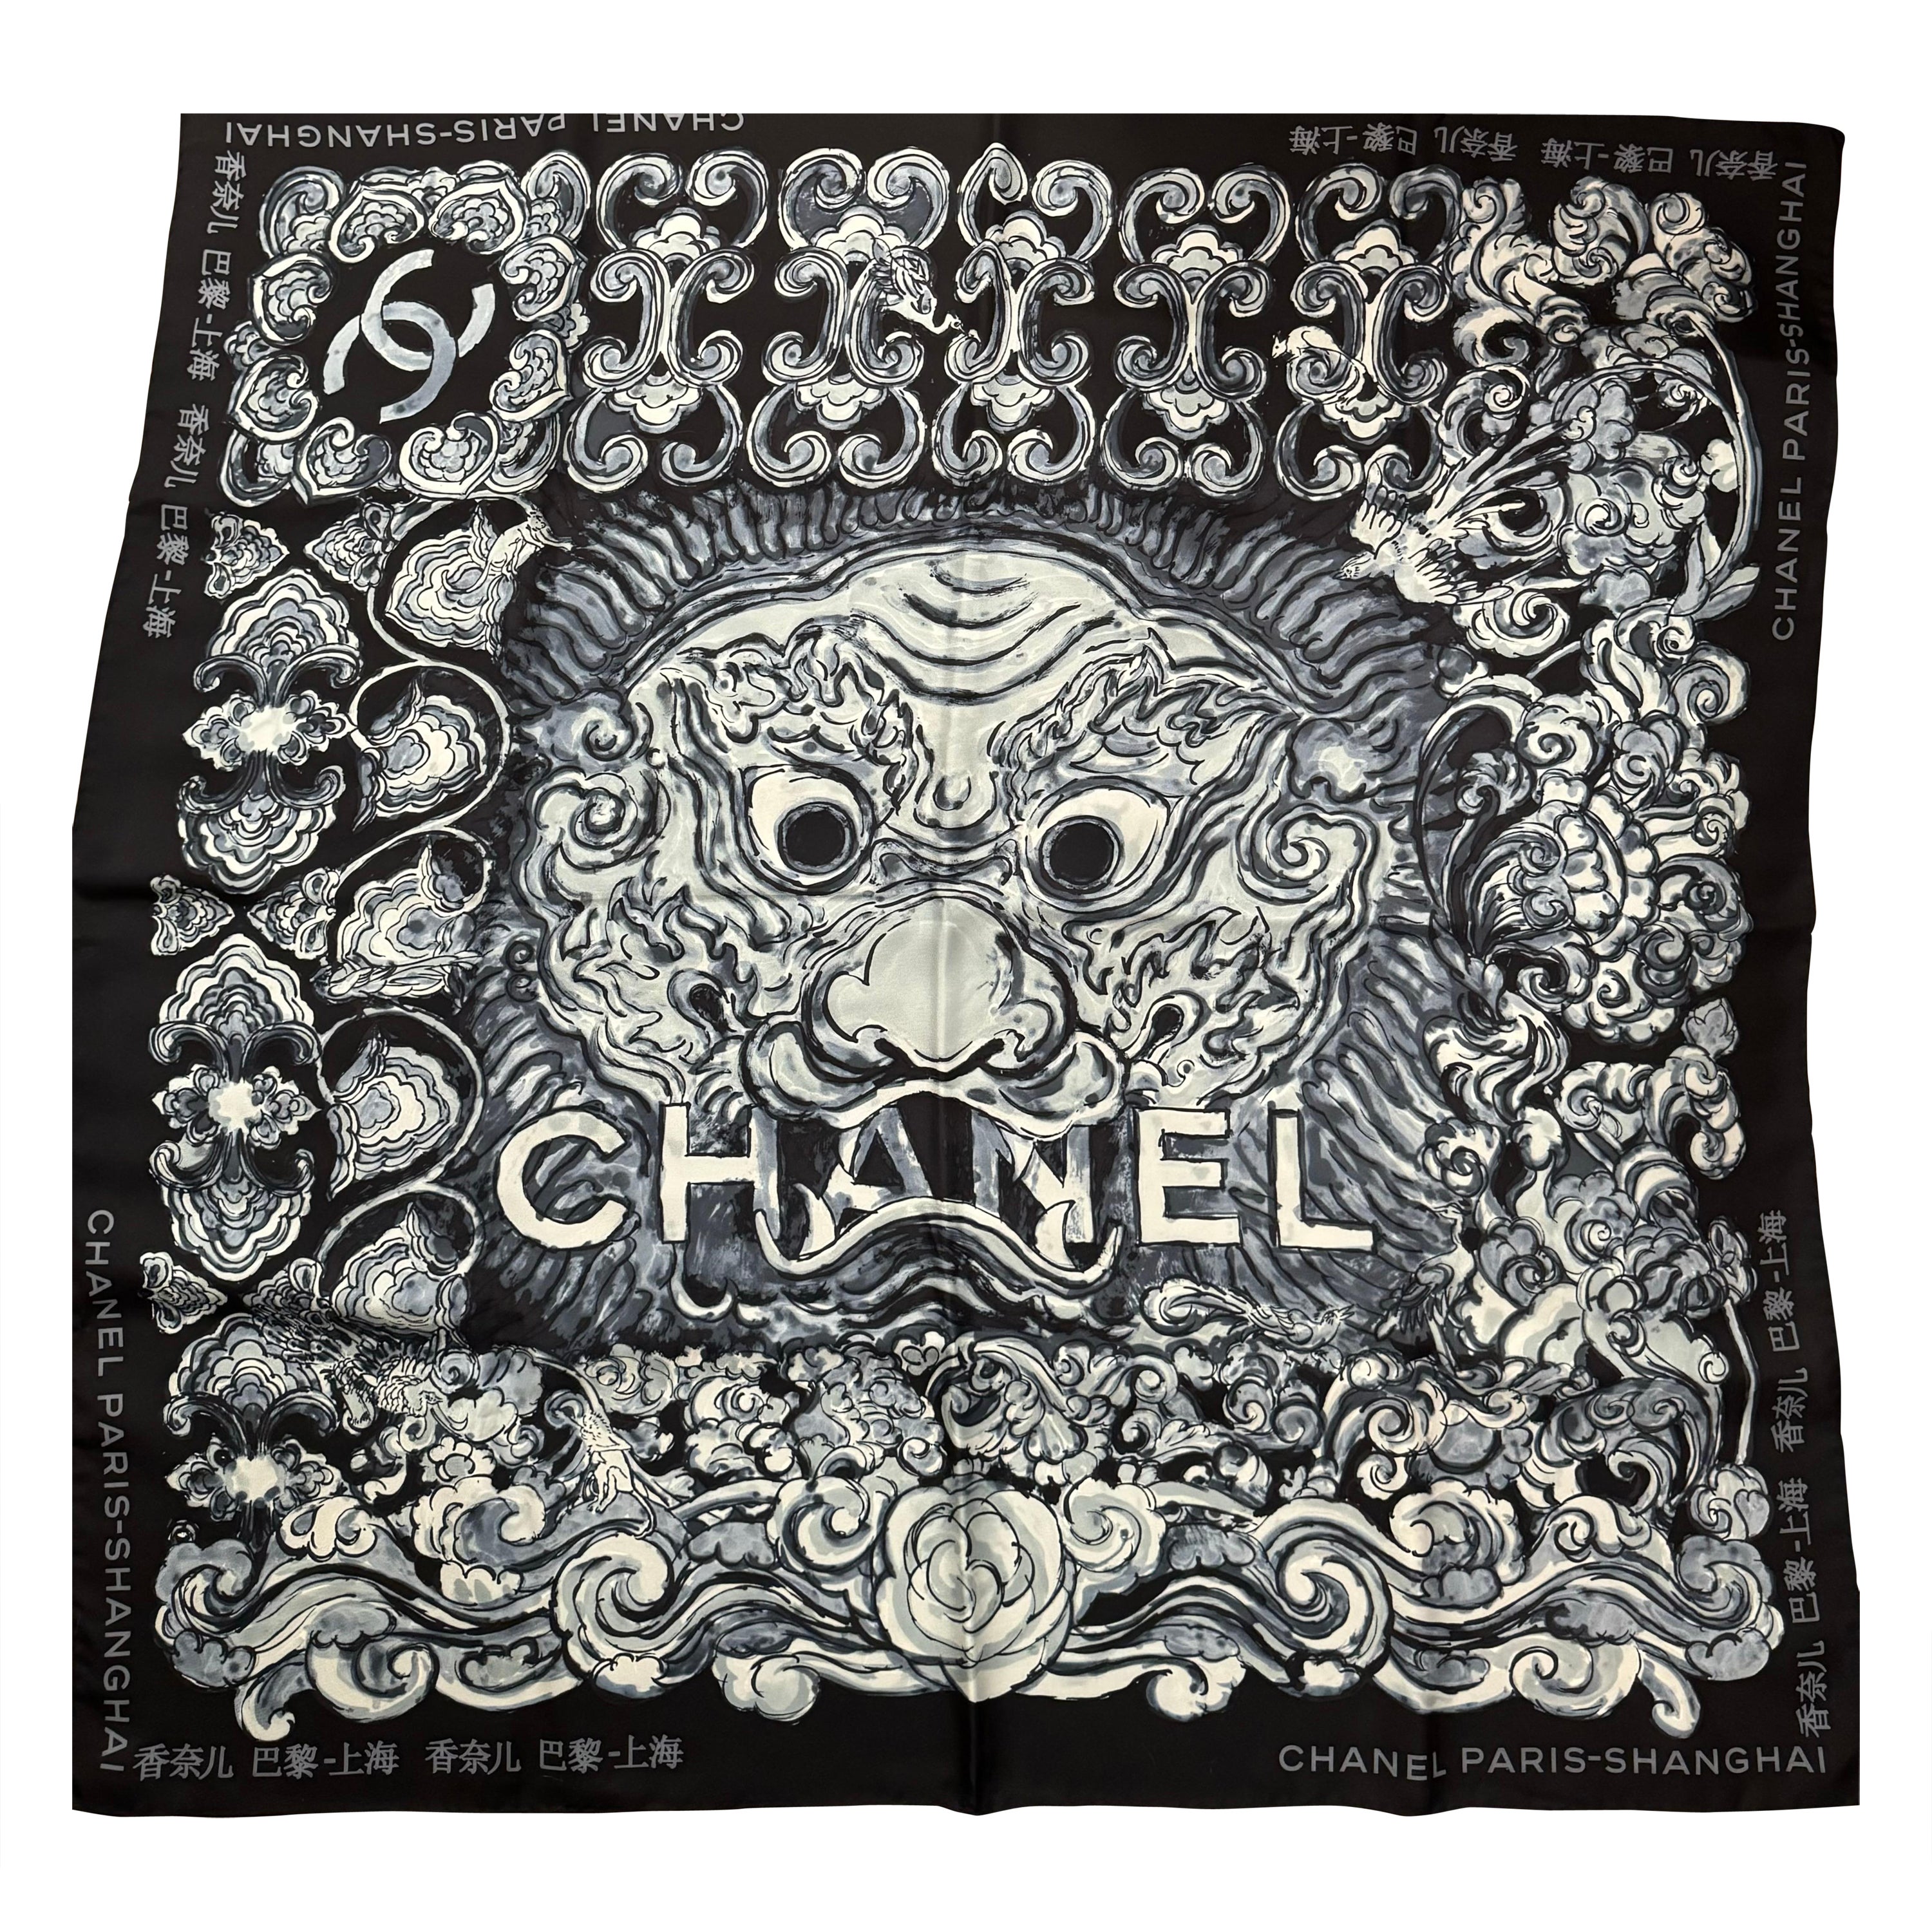 Rare Chanel Paris Shanghai 2010 silk scarf limited edition  For Sale